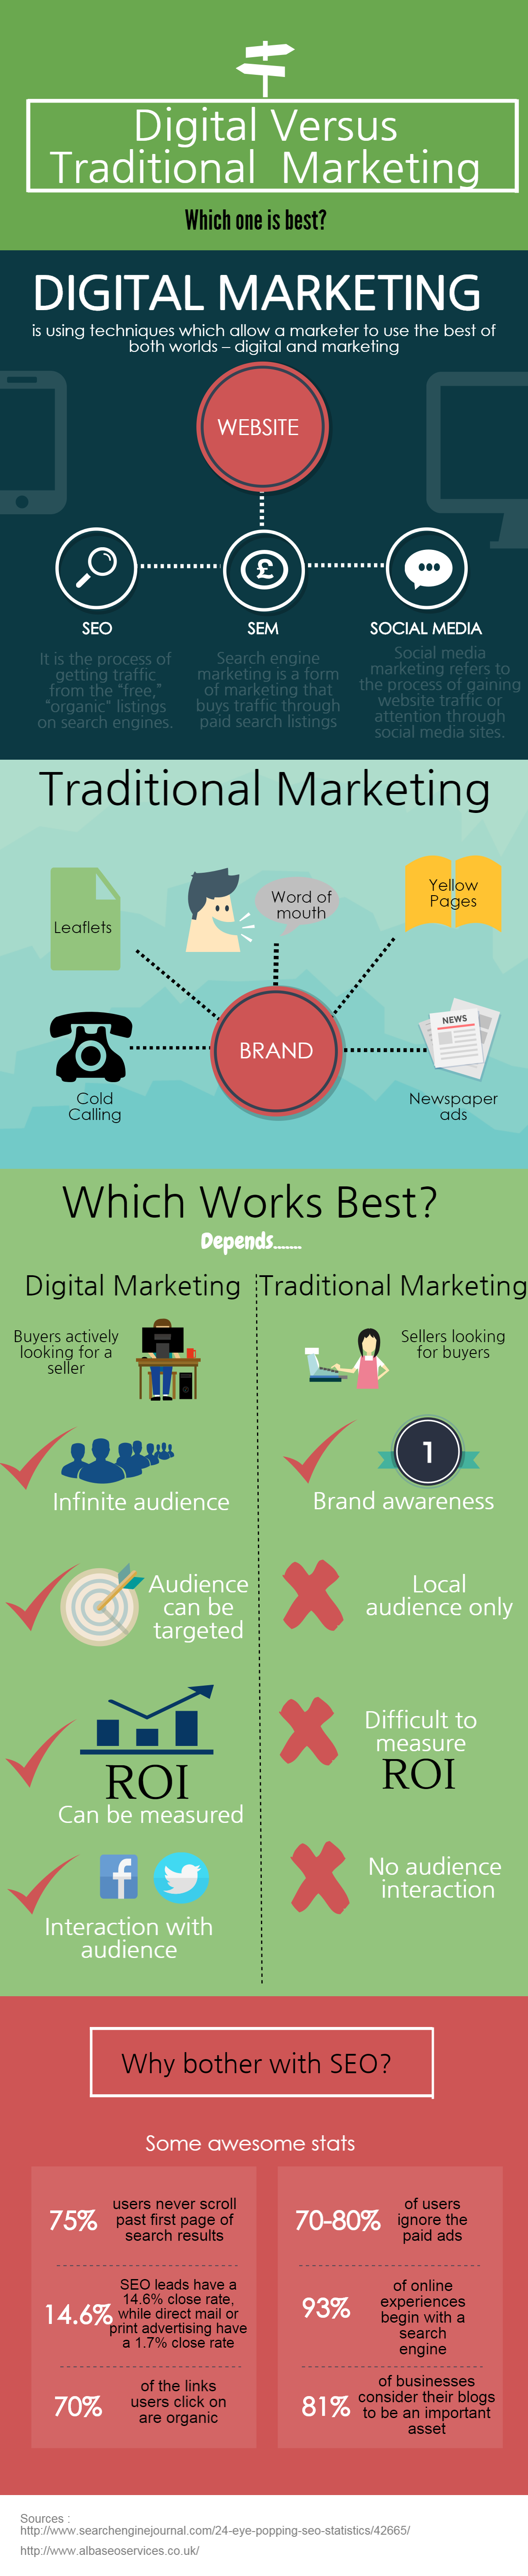 digital marketing versus traditional marketing 54ee2e84dce69 - Best Digital Marketing Strategies For Online Casinos